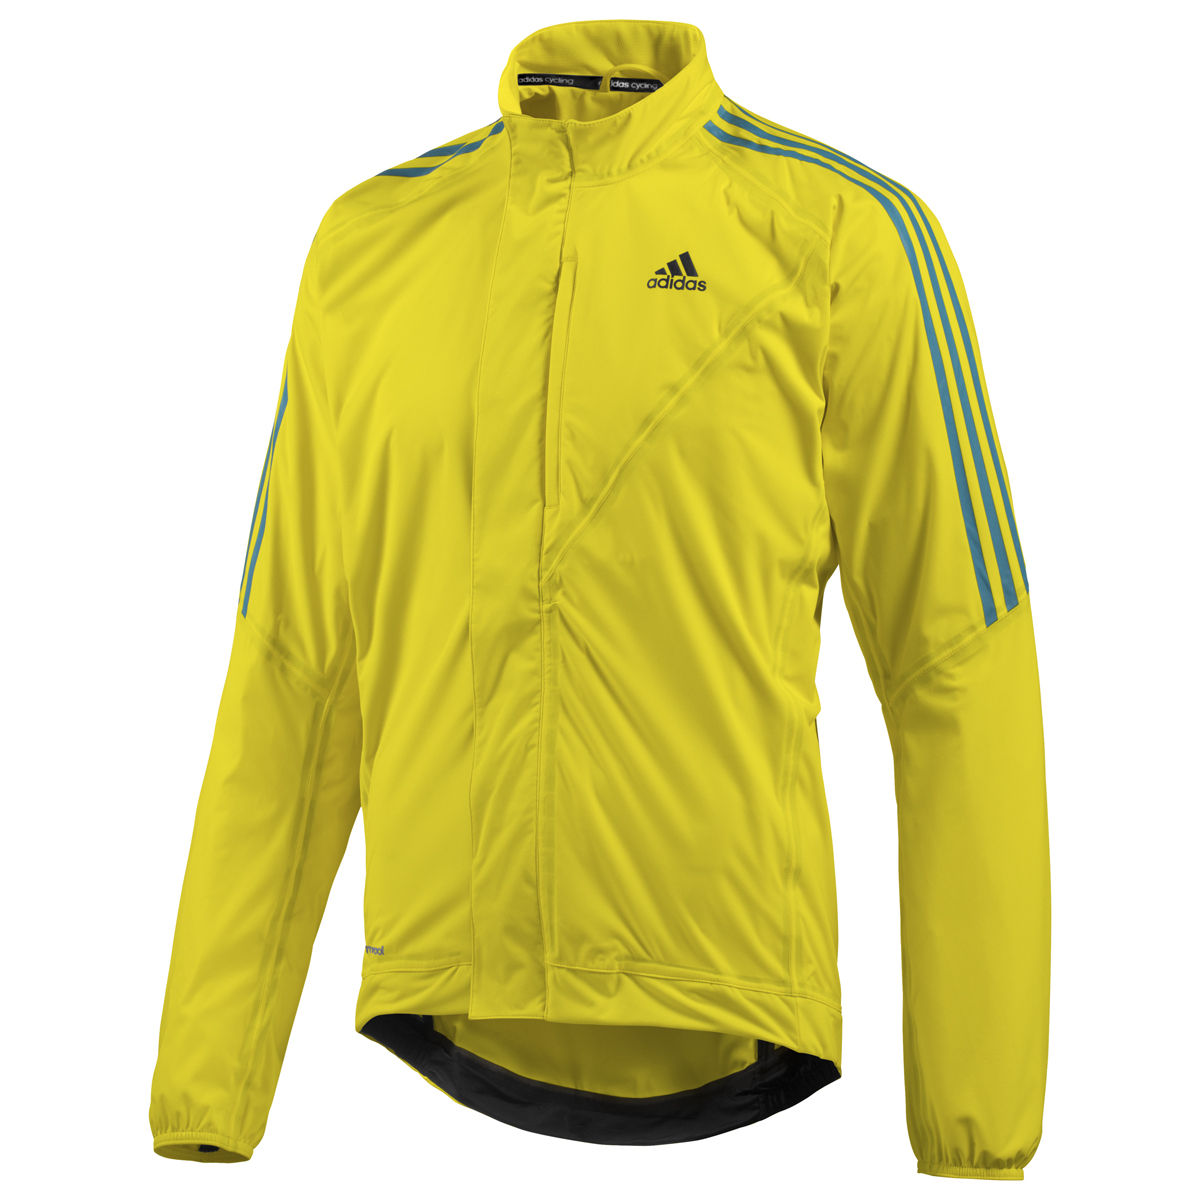 adidas waterproof cycling jacket